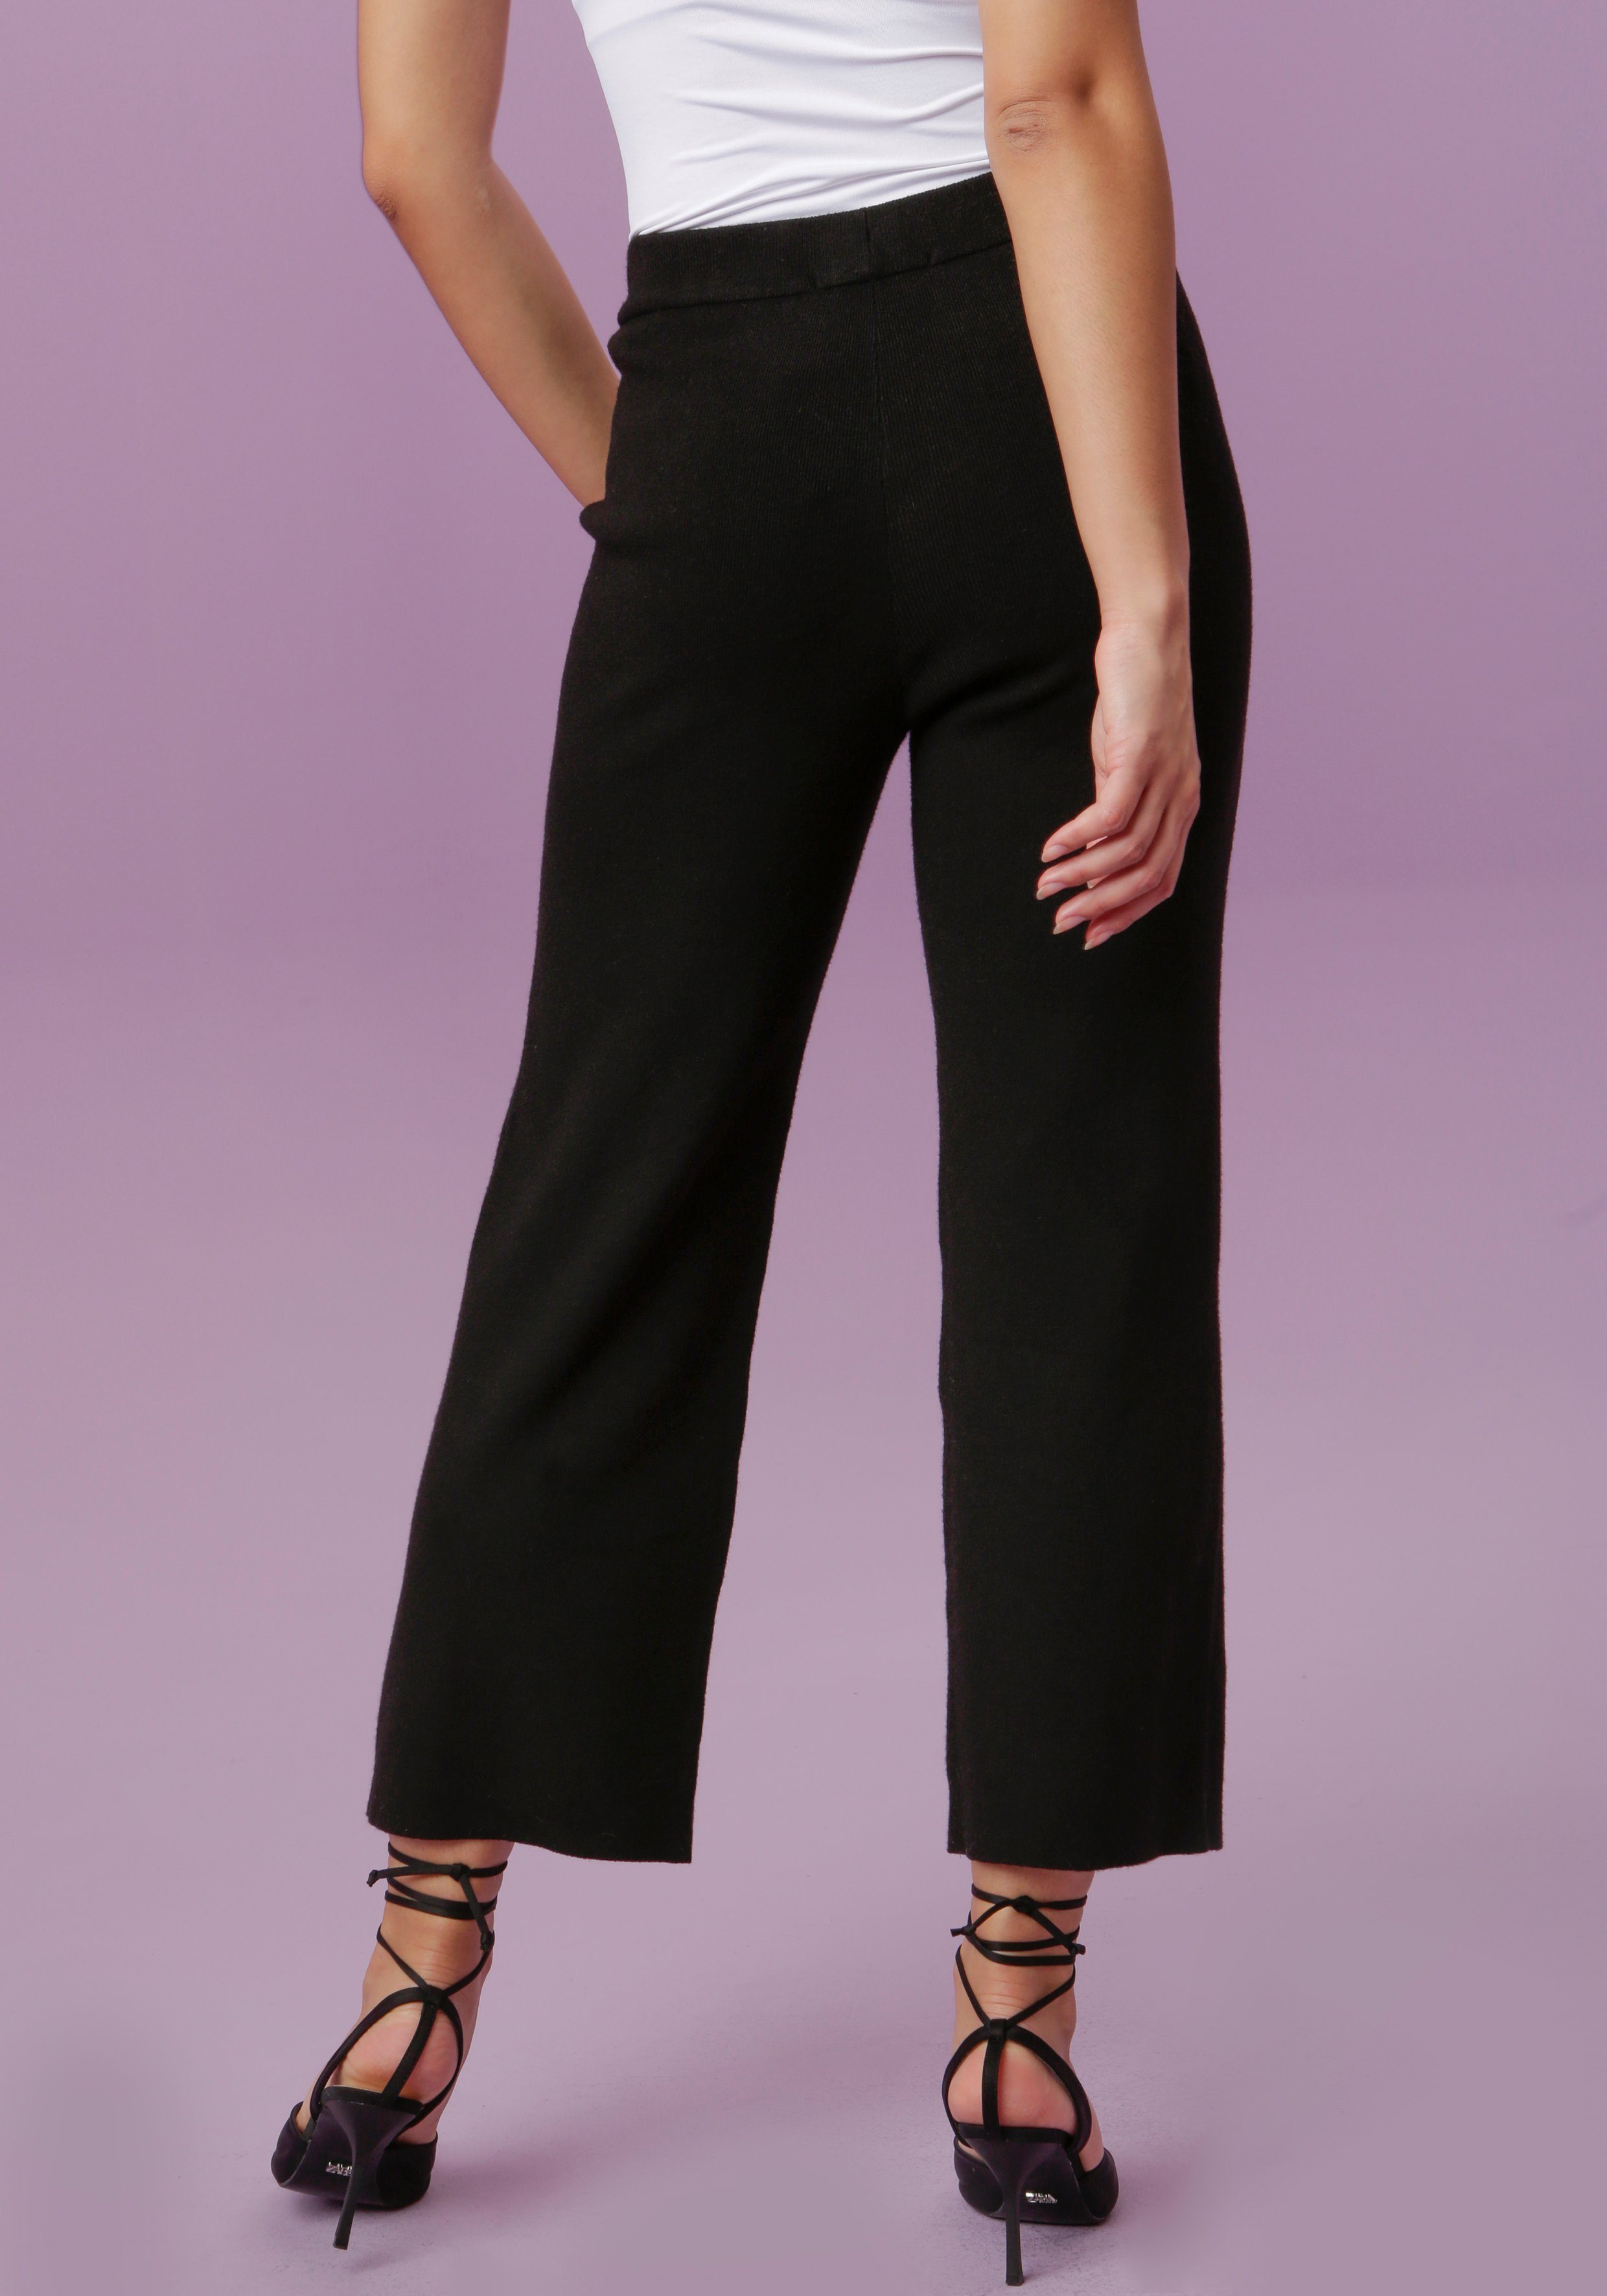 CASUAL in schwarz Culotte-Form Strickhose Aniston trendiger